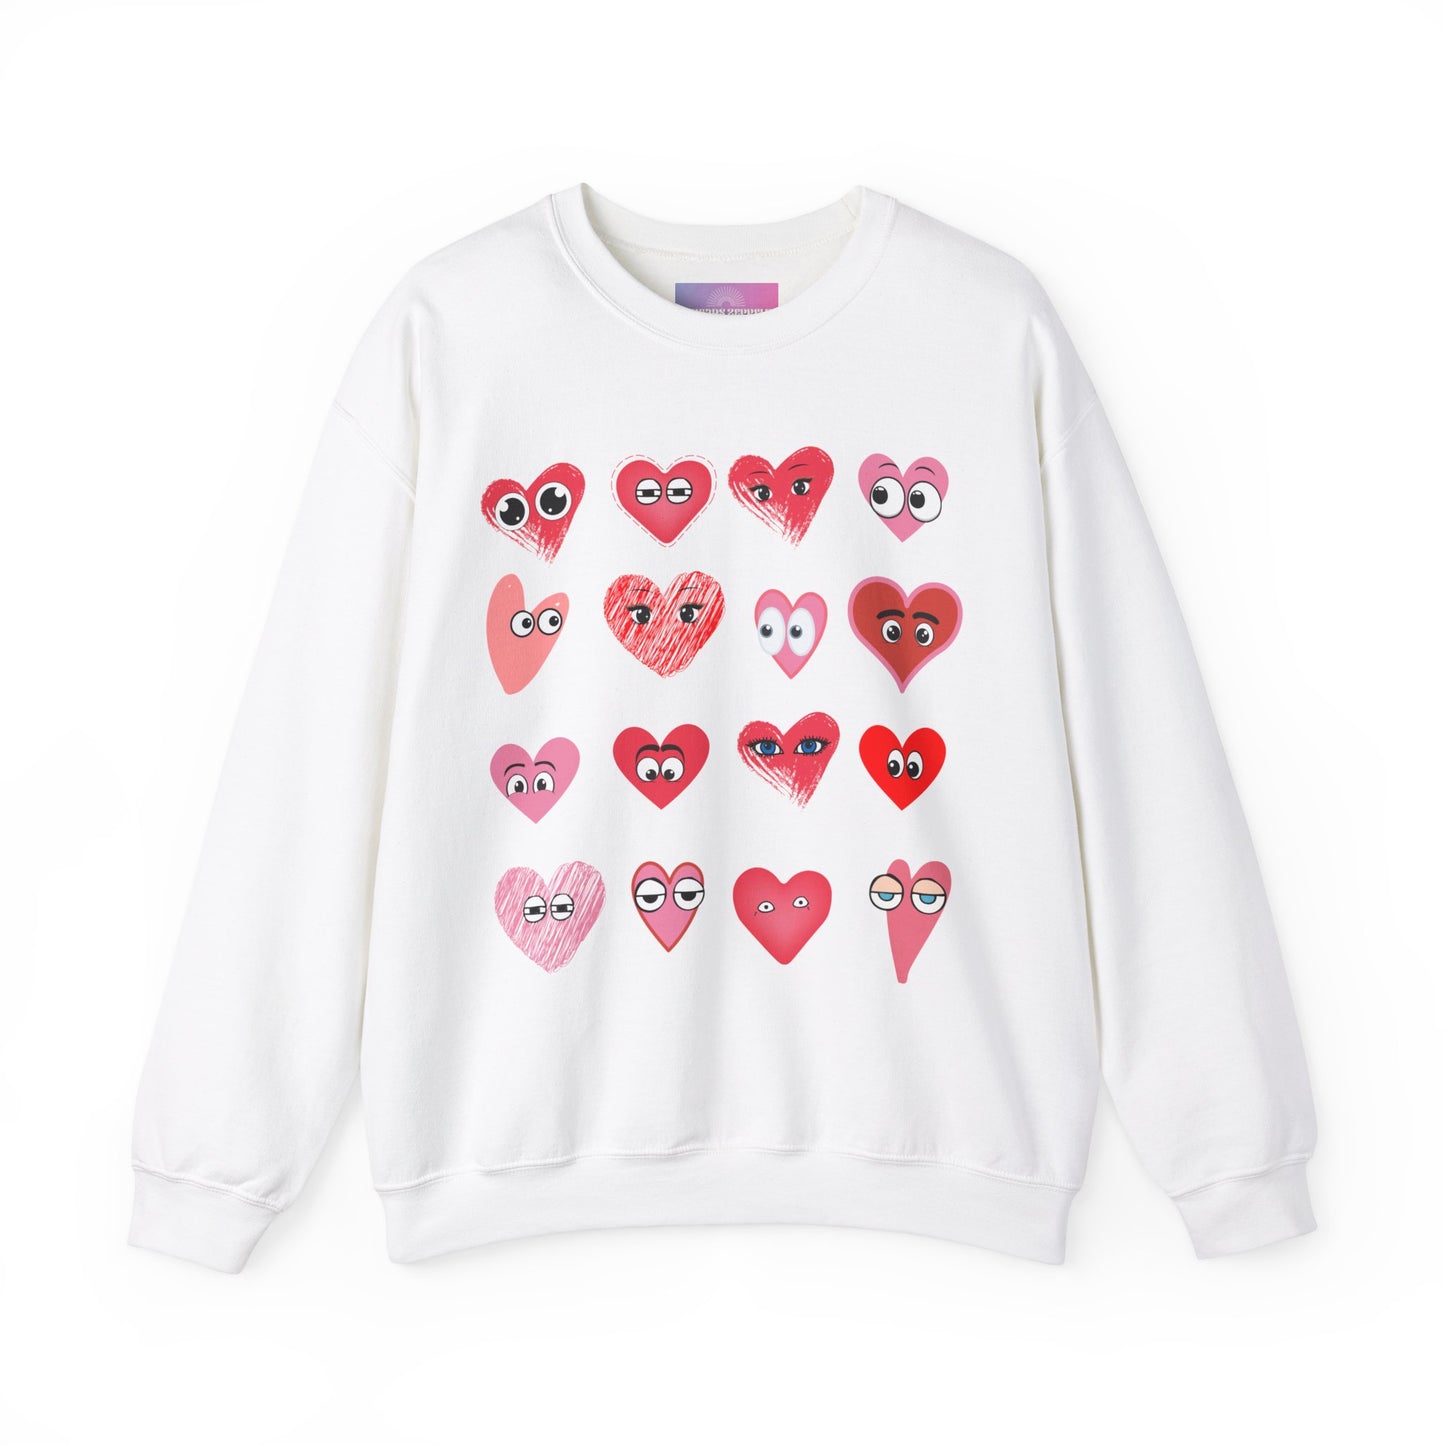 Retro Heart faces Sweatshirt, Retro eyes Valentines Day Sweater, Retro expression Crewneck, Cute Valentines Day Shirt, Premium Crewneck